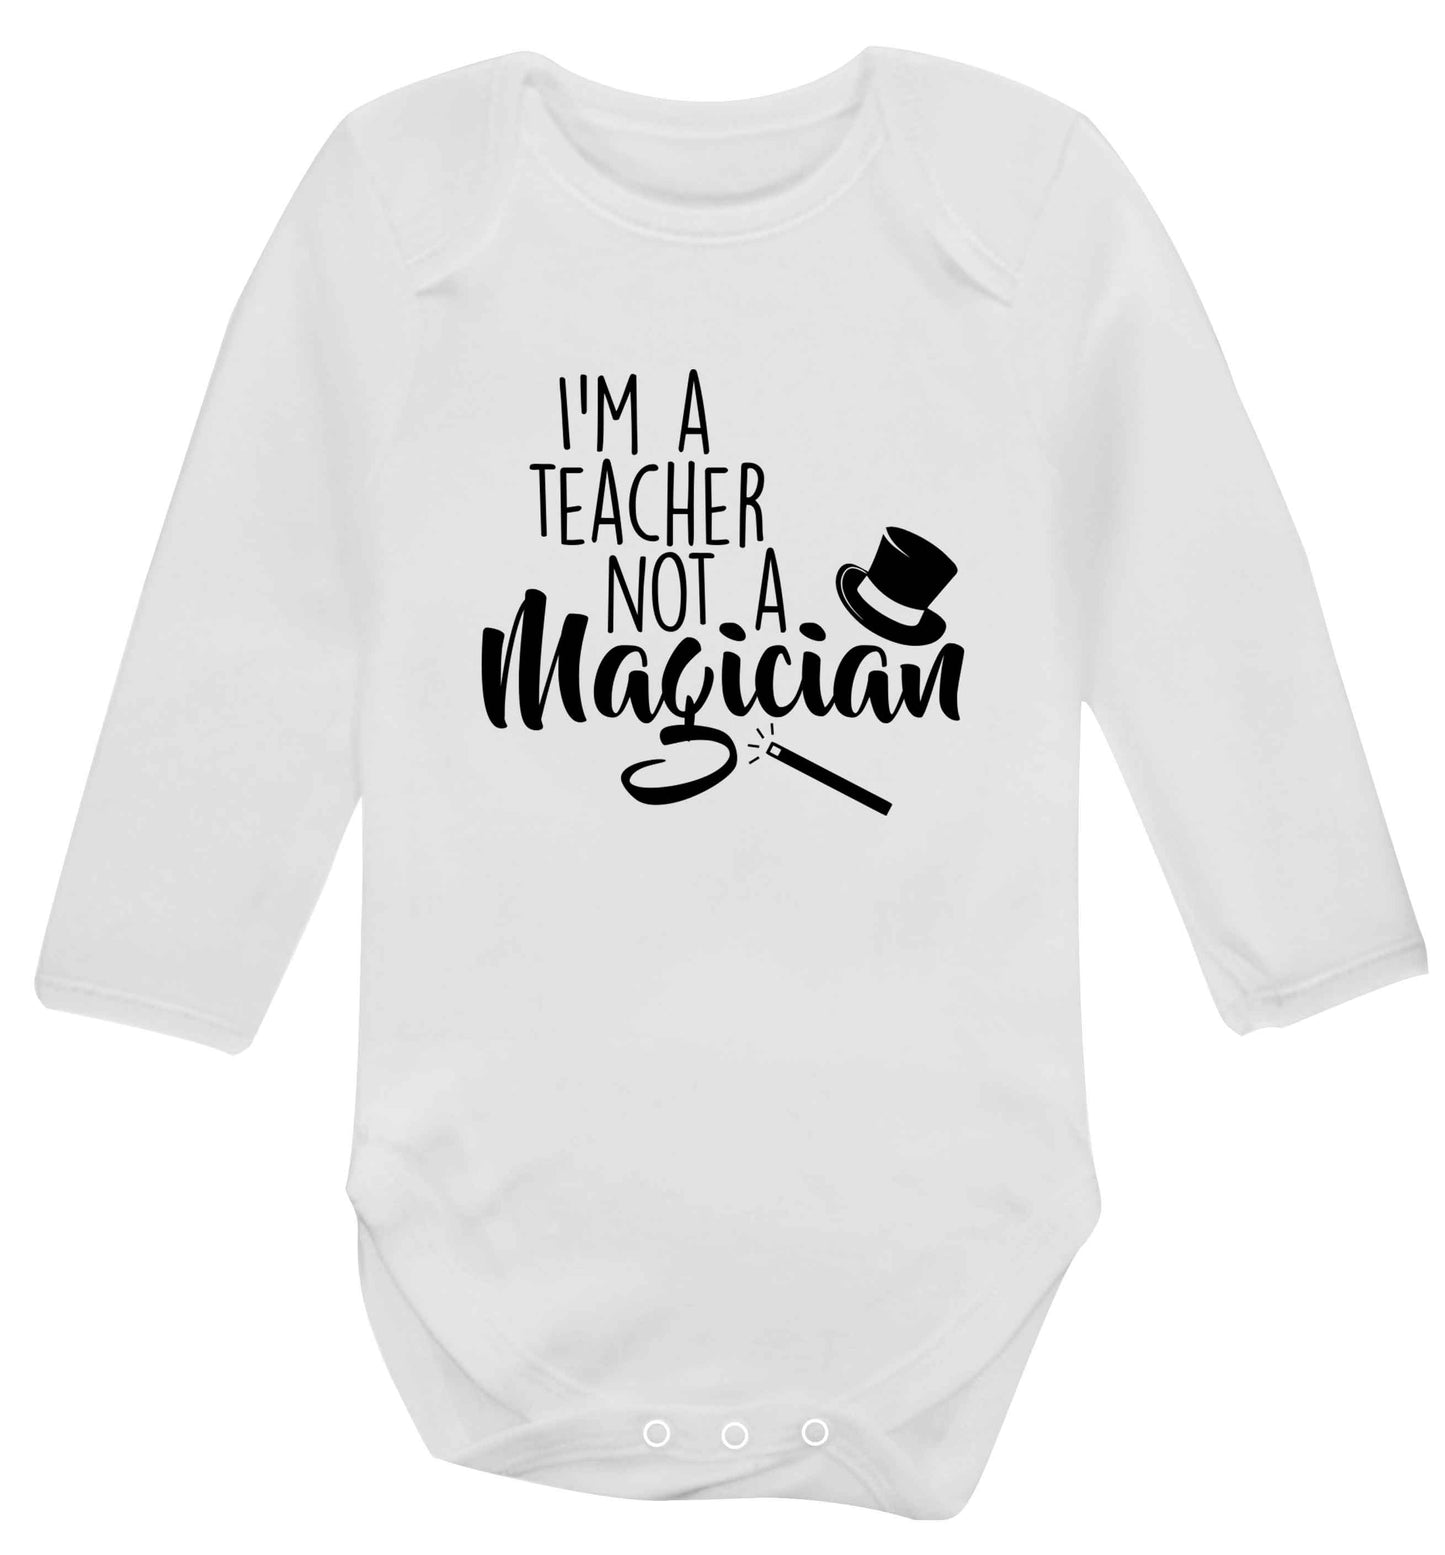 I'm a teacher not a magician baby vest long sleeved white 6-12 months